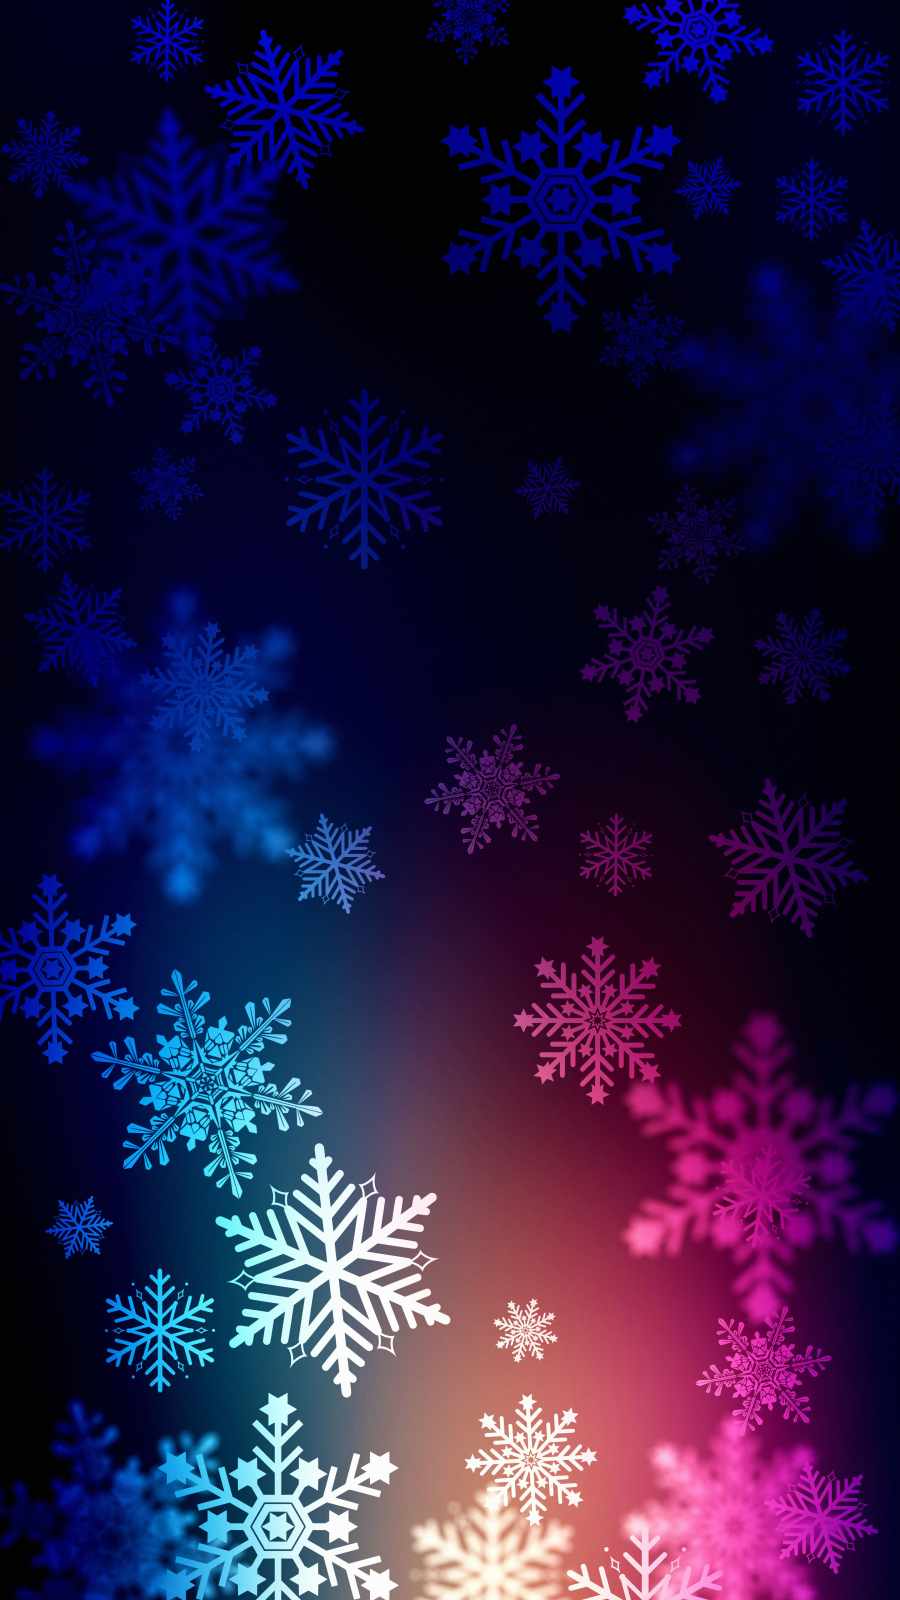 Frosty Winter IPhone Wallpaper Wallpaper, iPhone Wallpaper